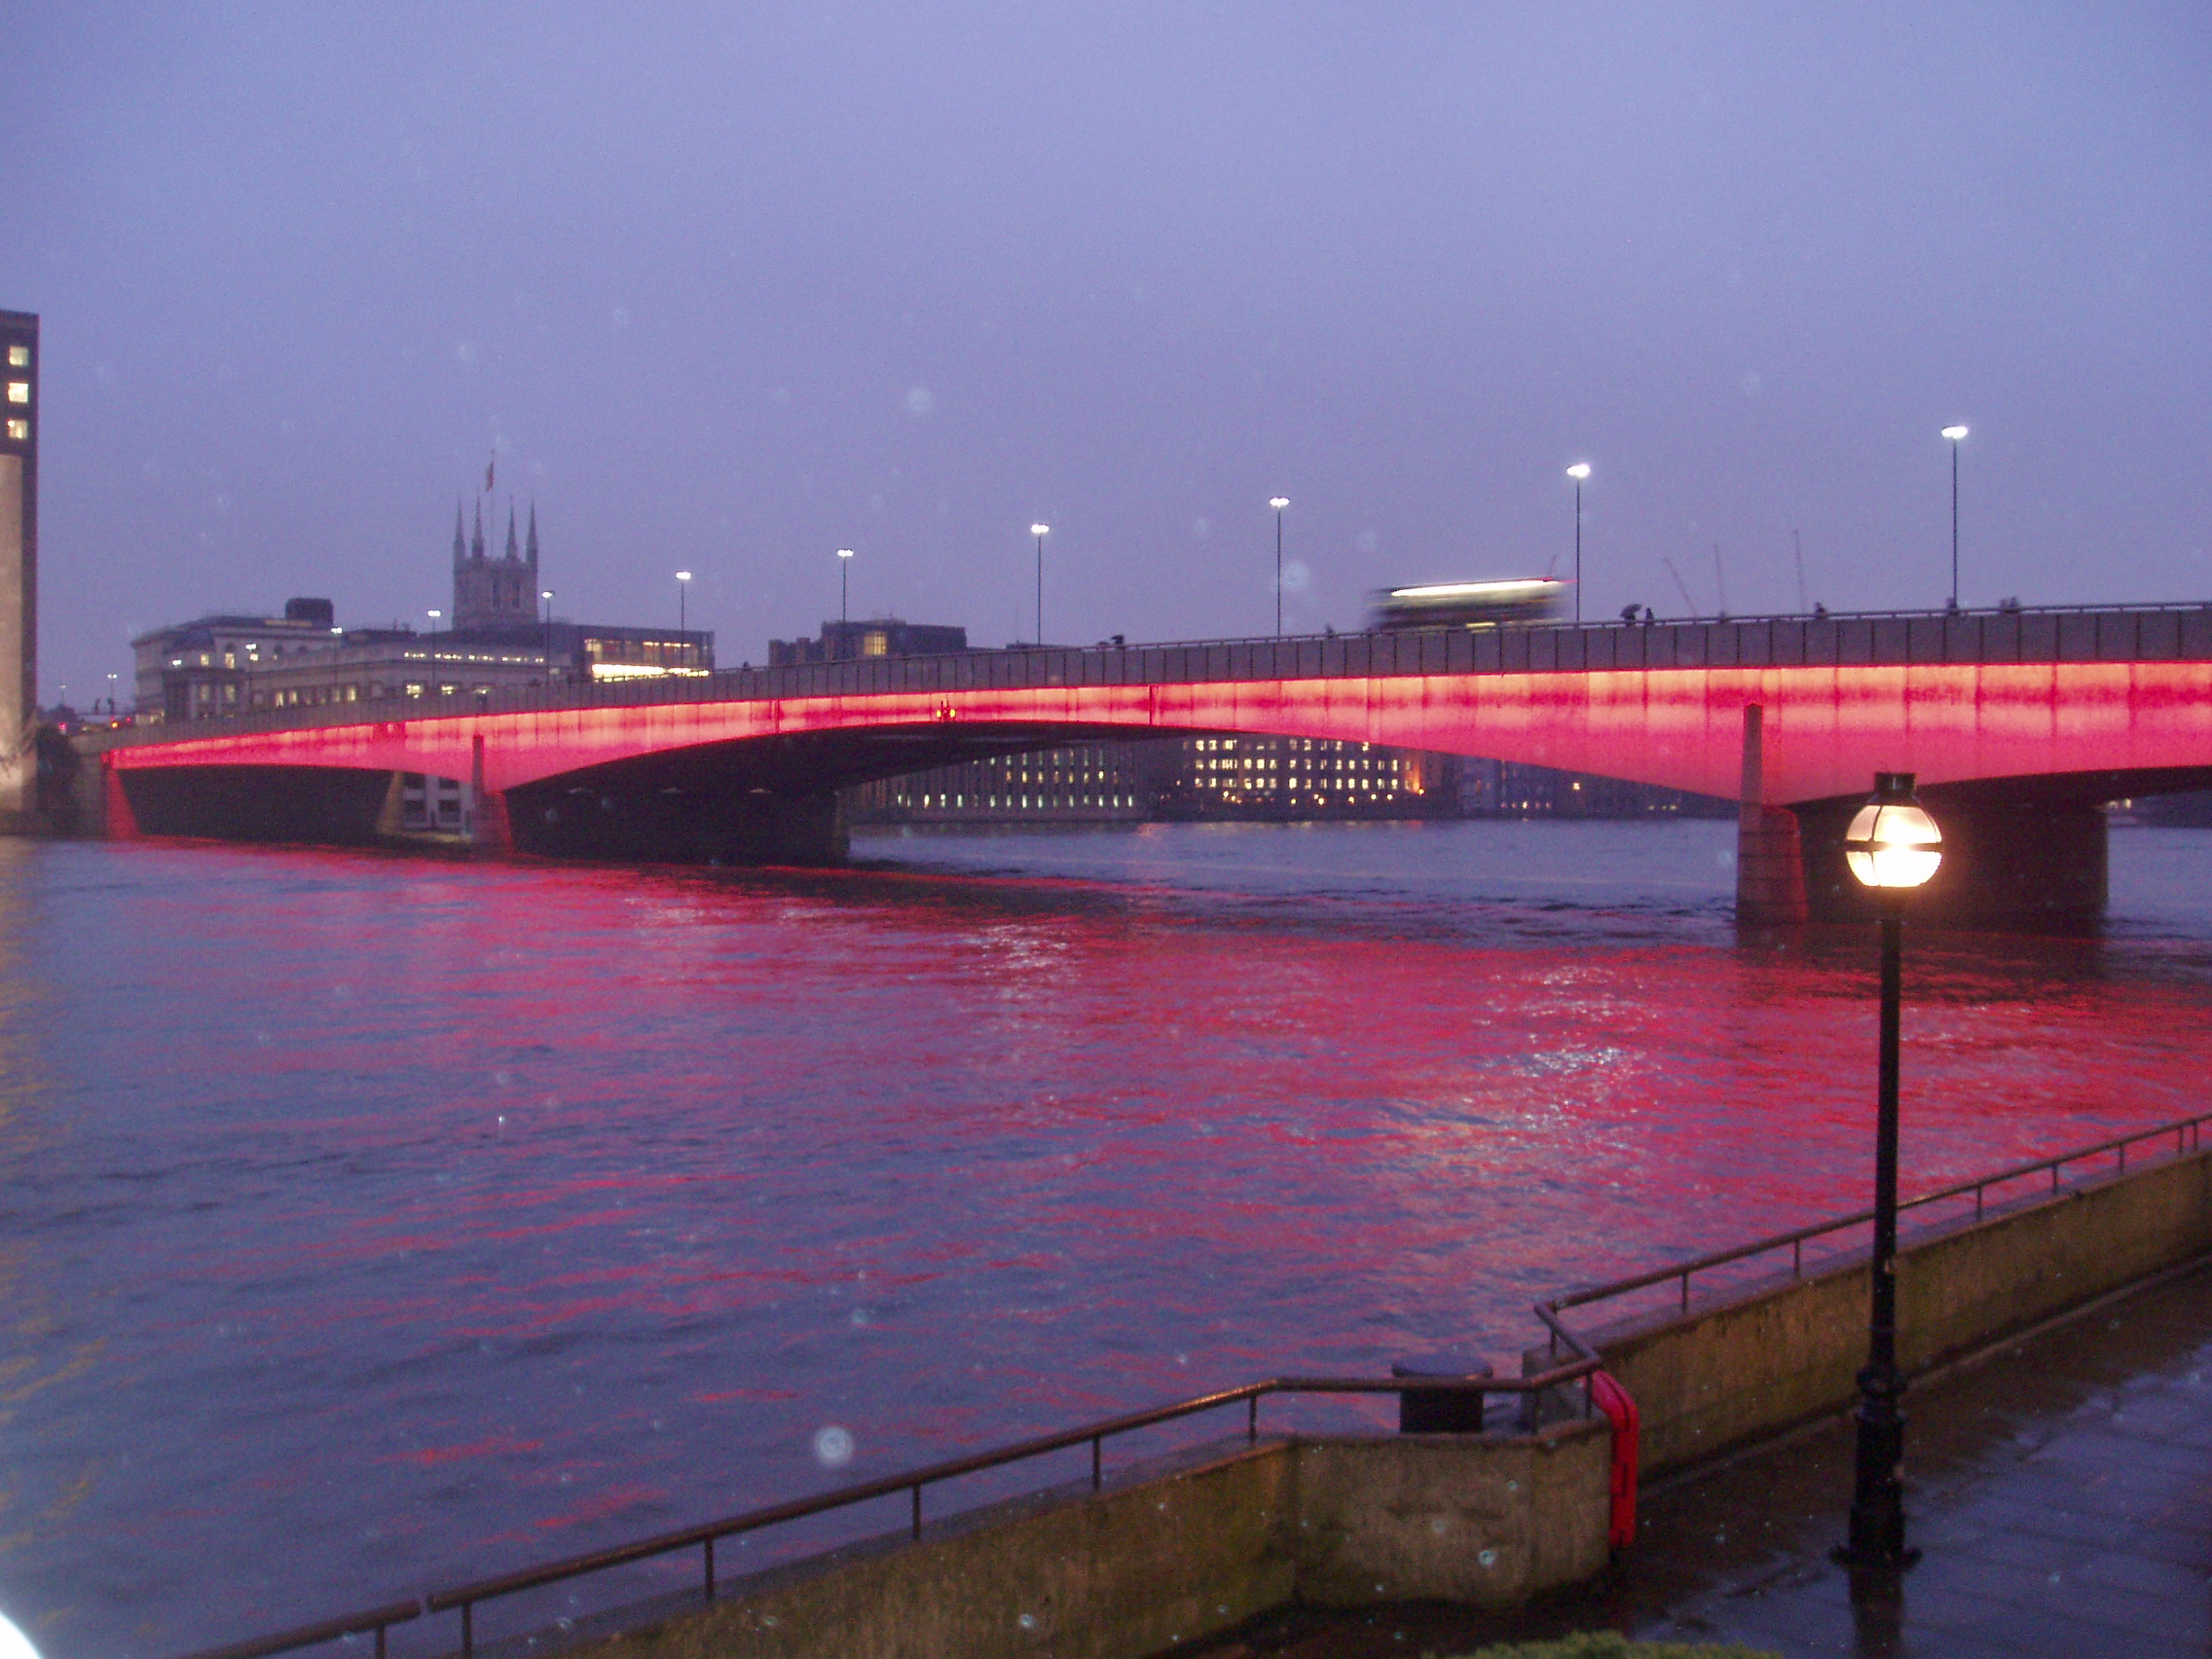 Injured London Bridge hero Lukasz fought terrorist ‘right until the end’